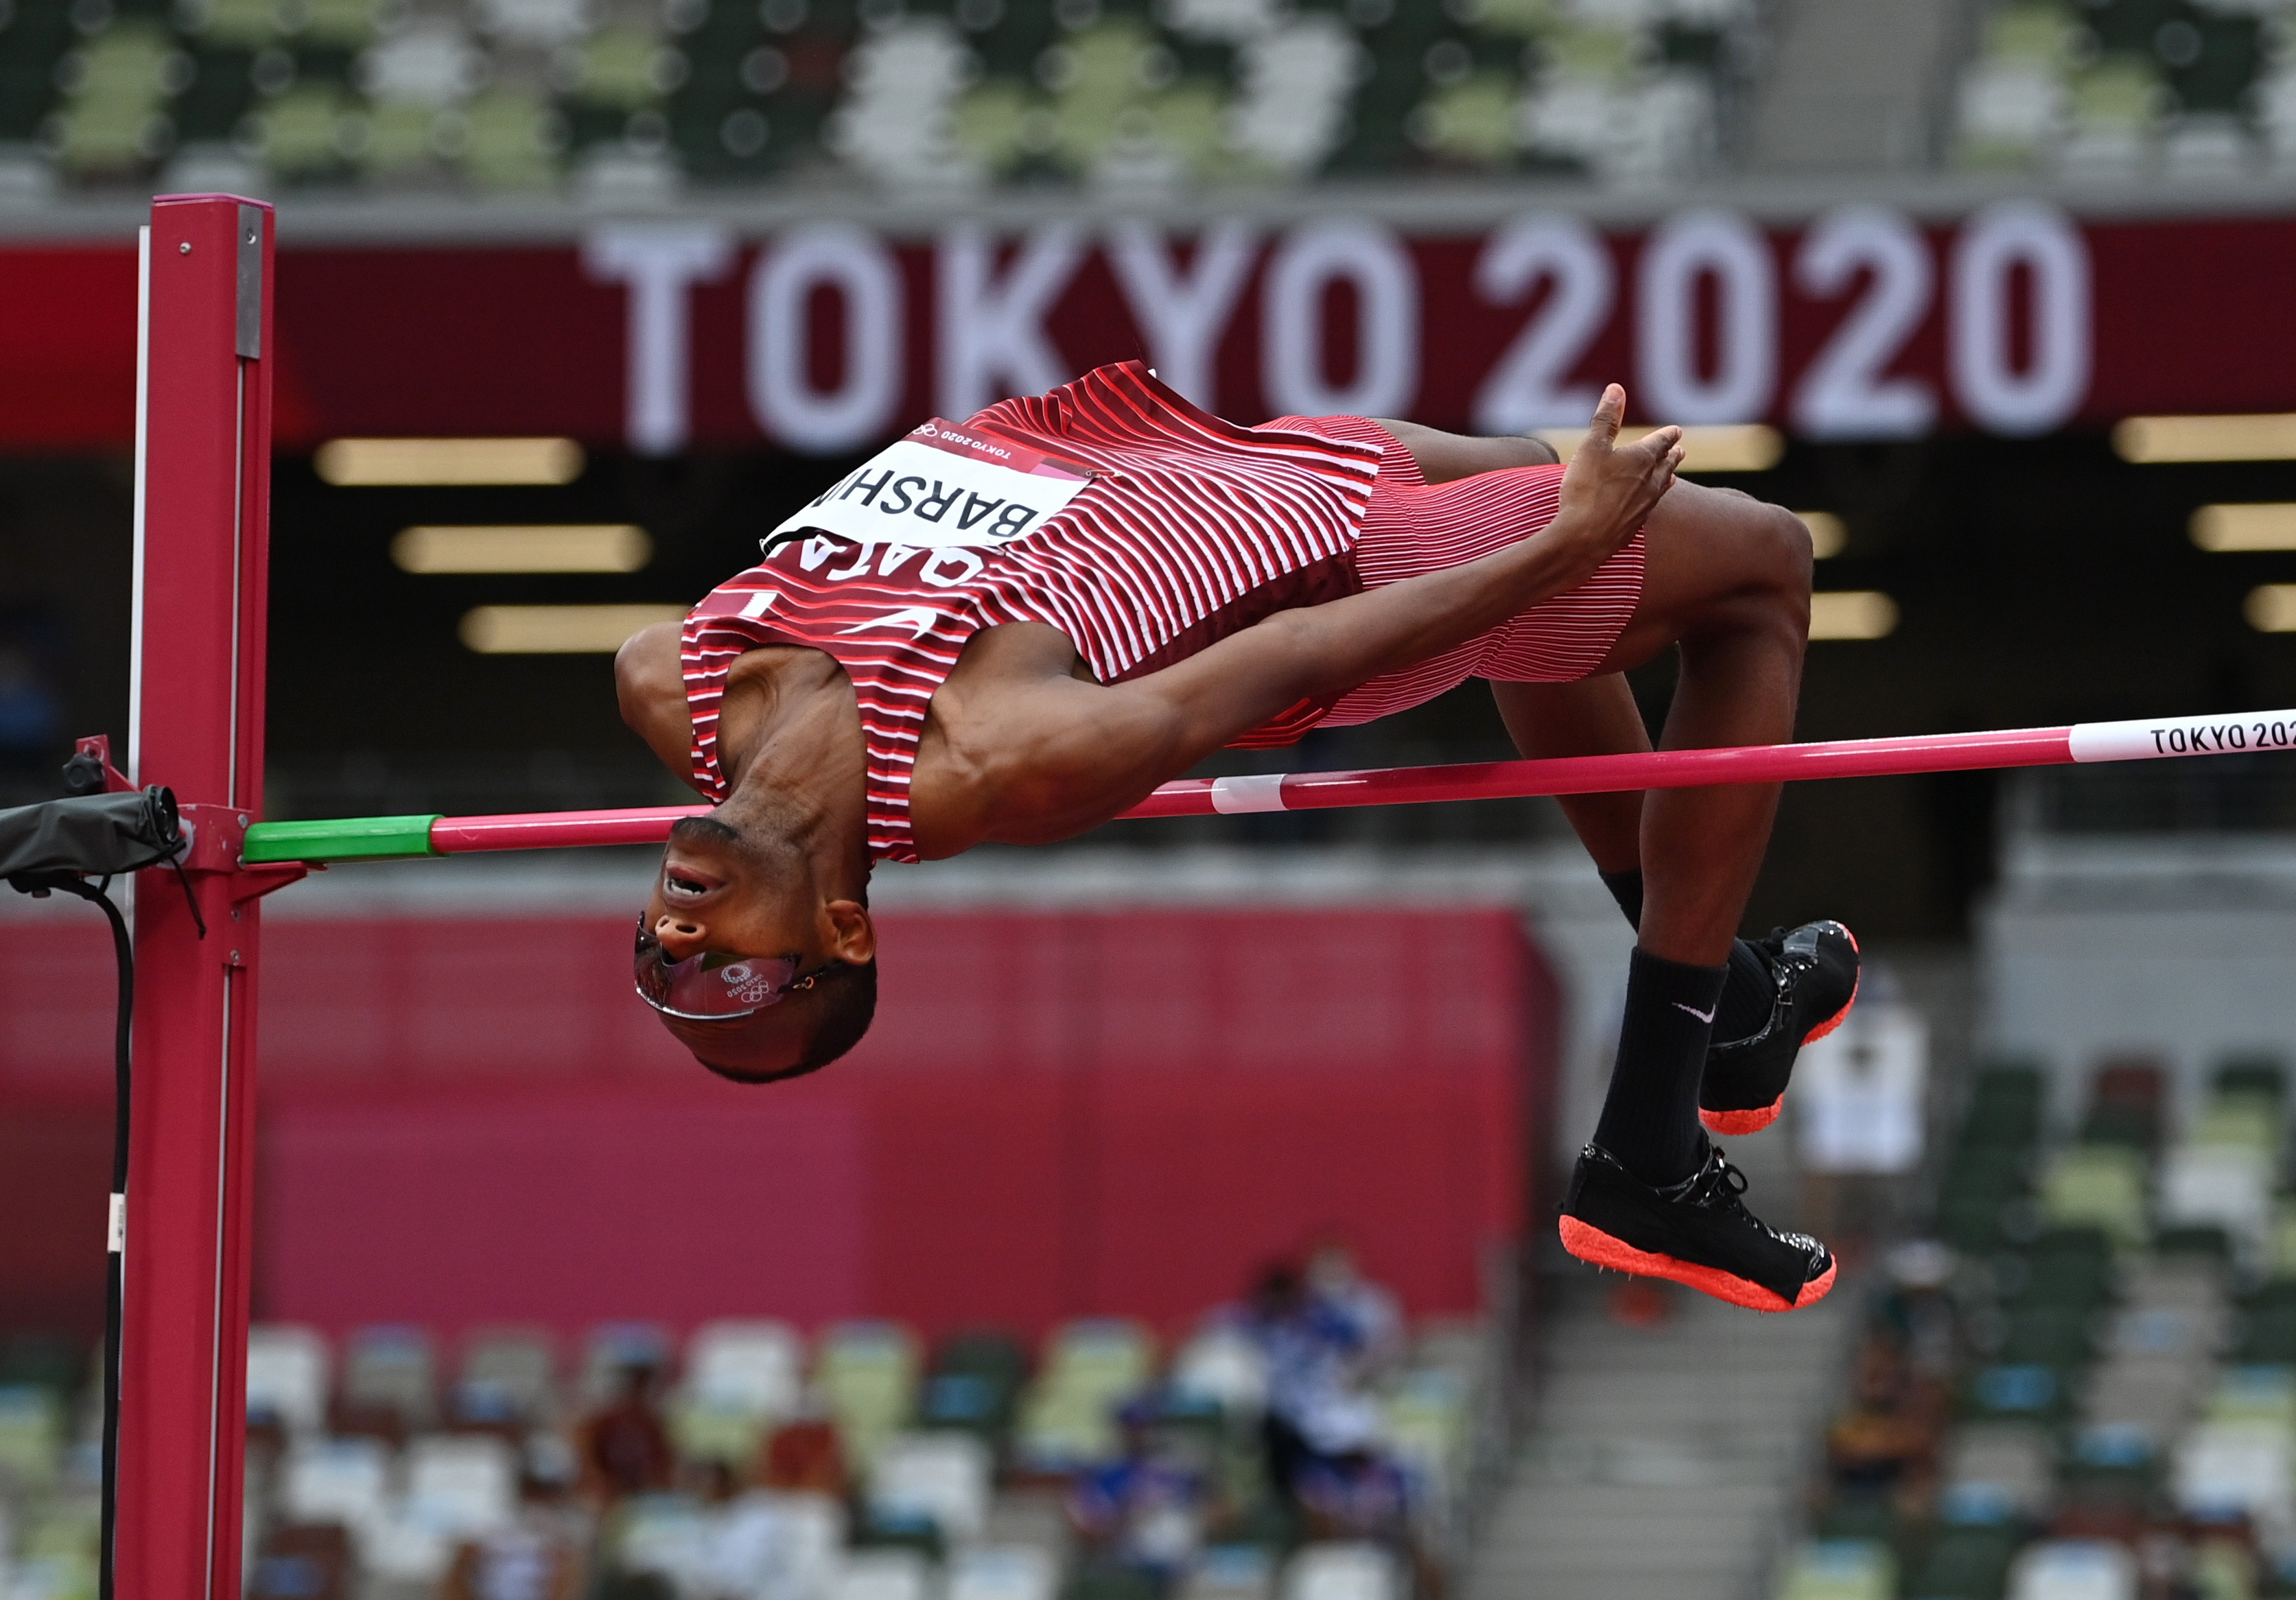 Olympic high jump champion Barshim headlines Diamond League opener at home in Doha